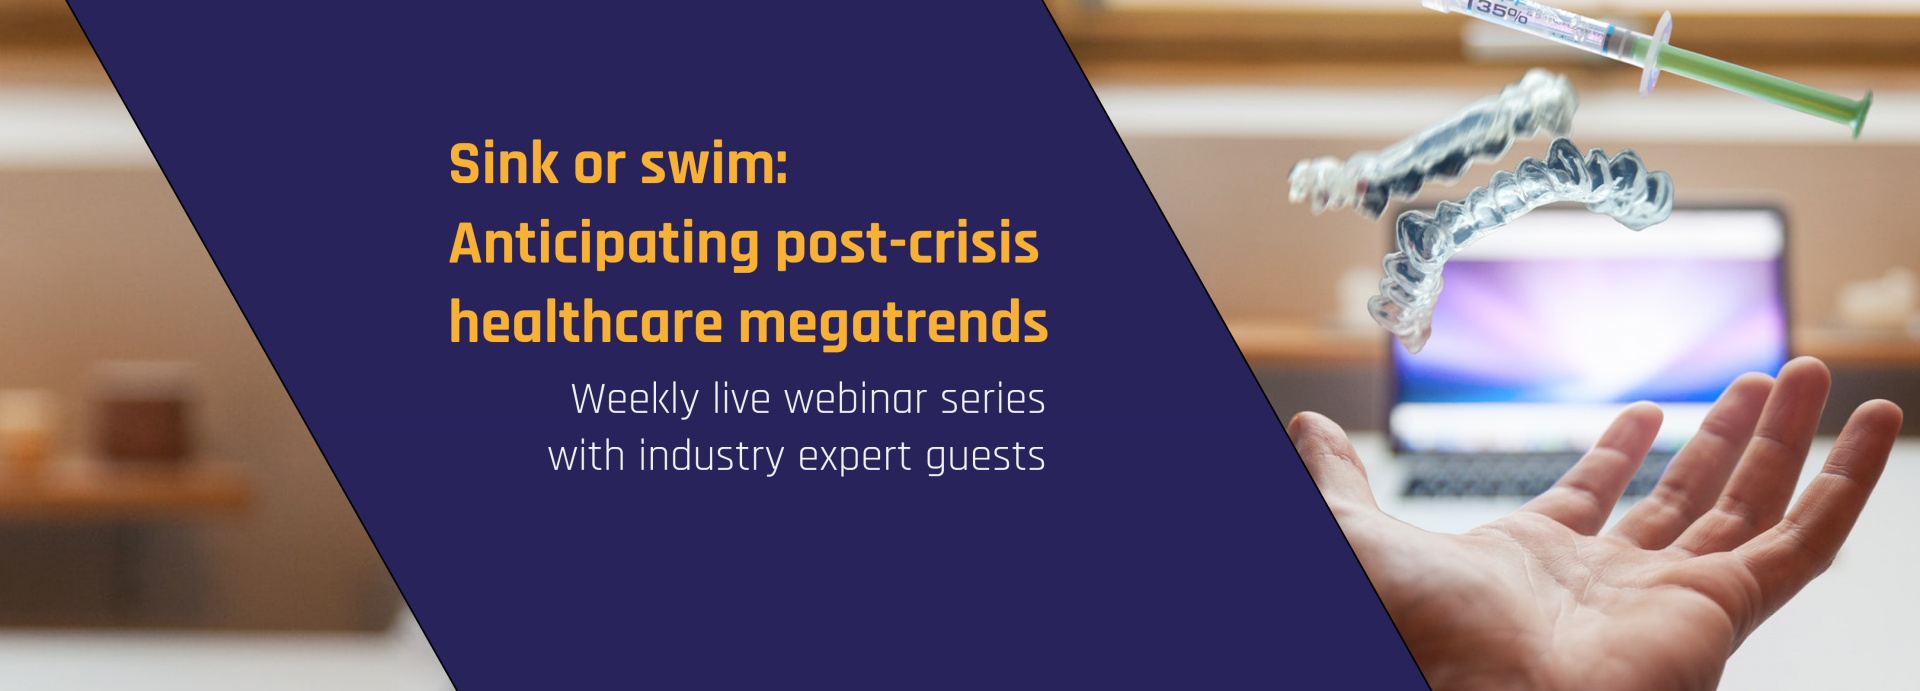 Sink or Swim: Anticipating post-crisis healthcare megatrends webinar